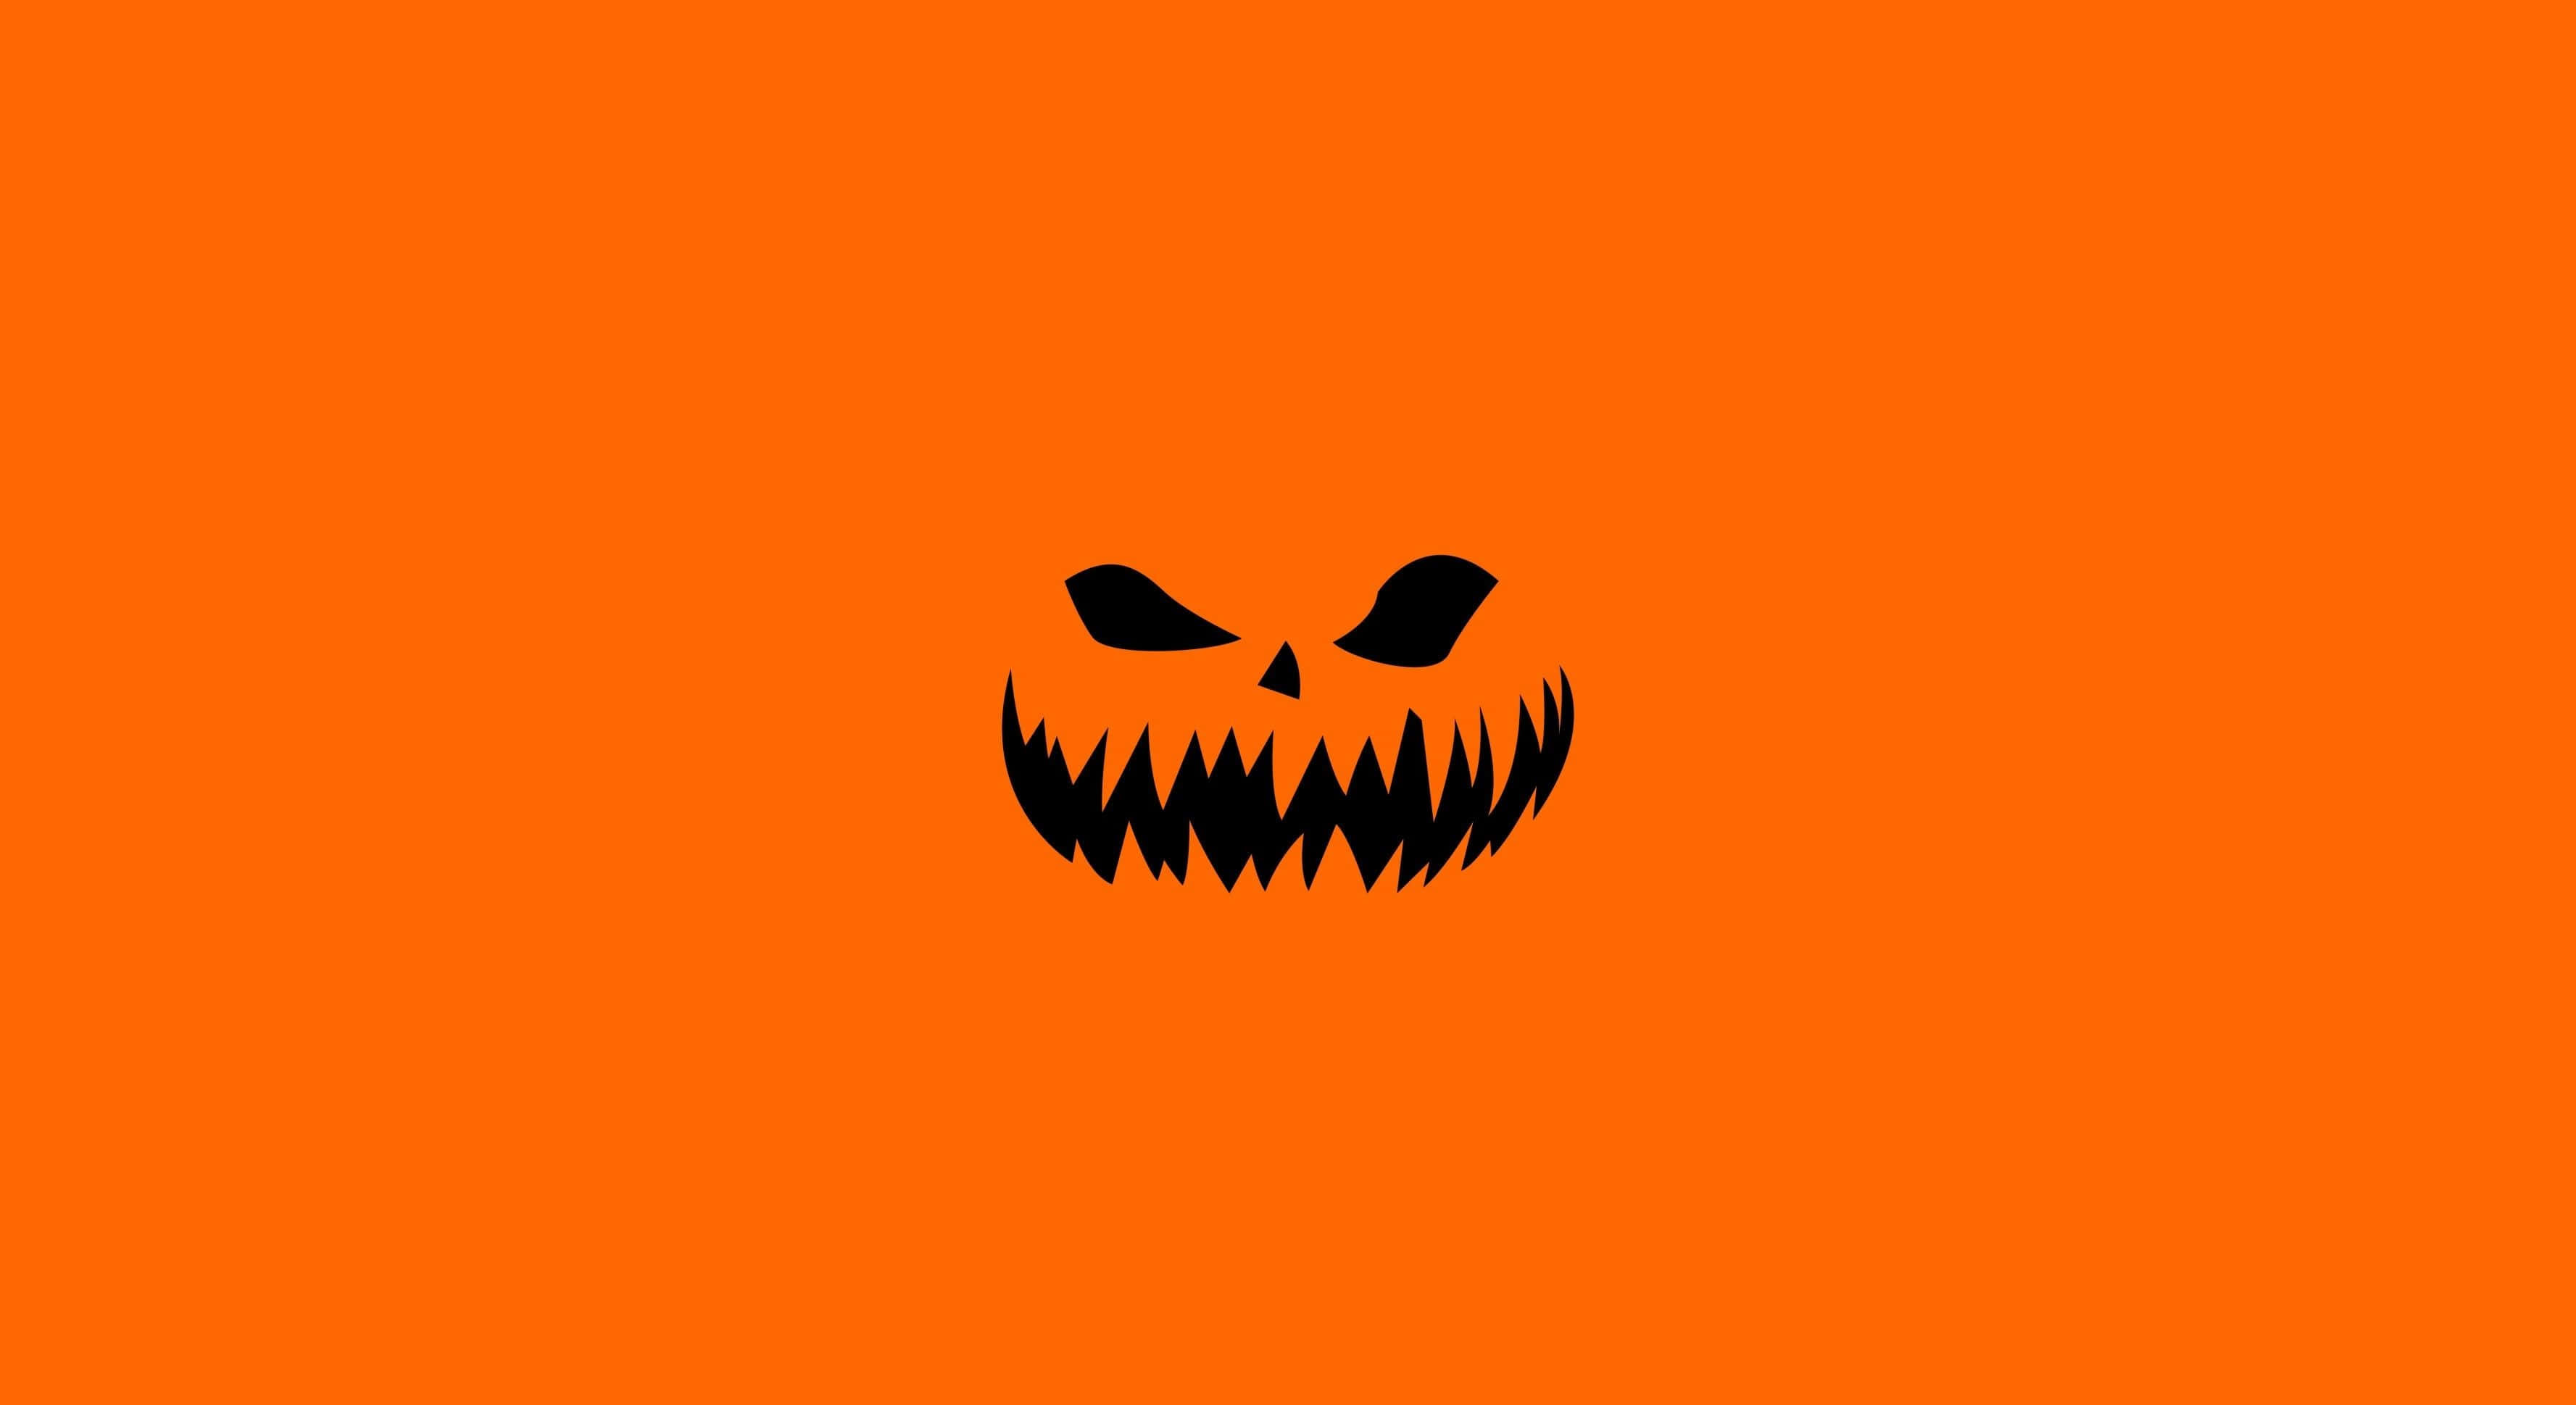 Sfondospaventoso Di Halloween Arancione